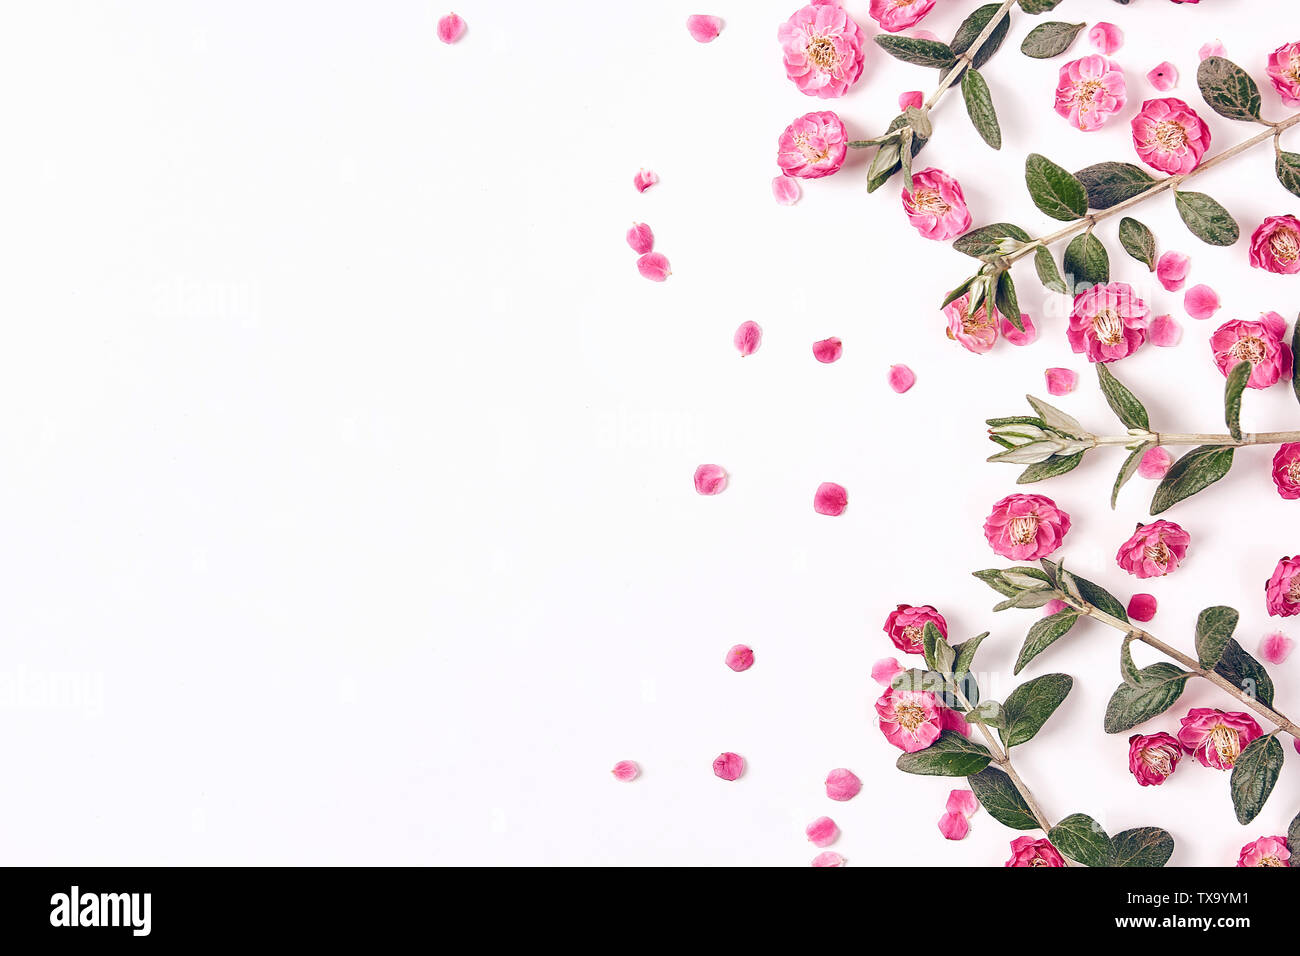 Creative flowers background Stock Photo